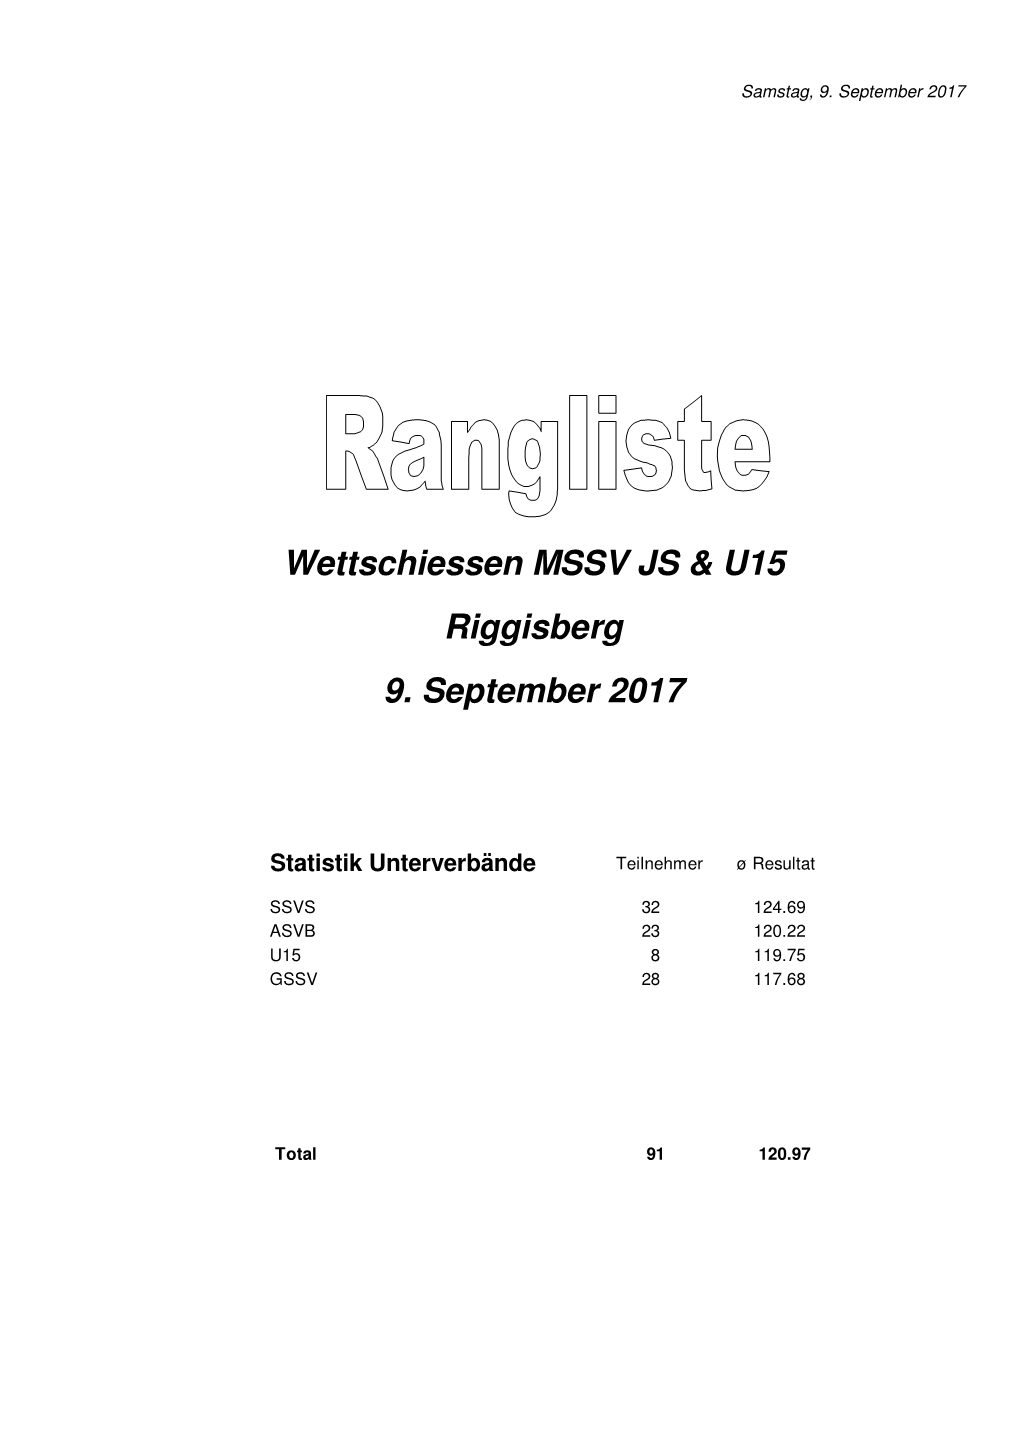 Wettschiessen MSSV JS & U15 Riggisberg 9. September 2017